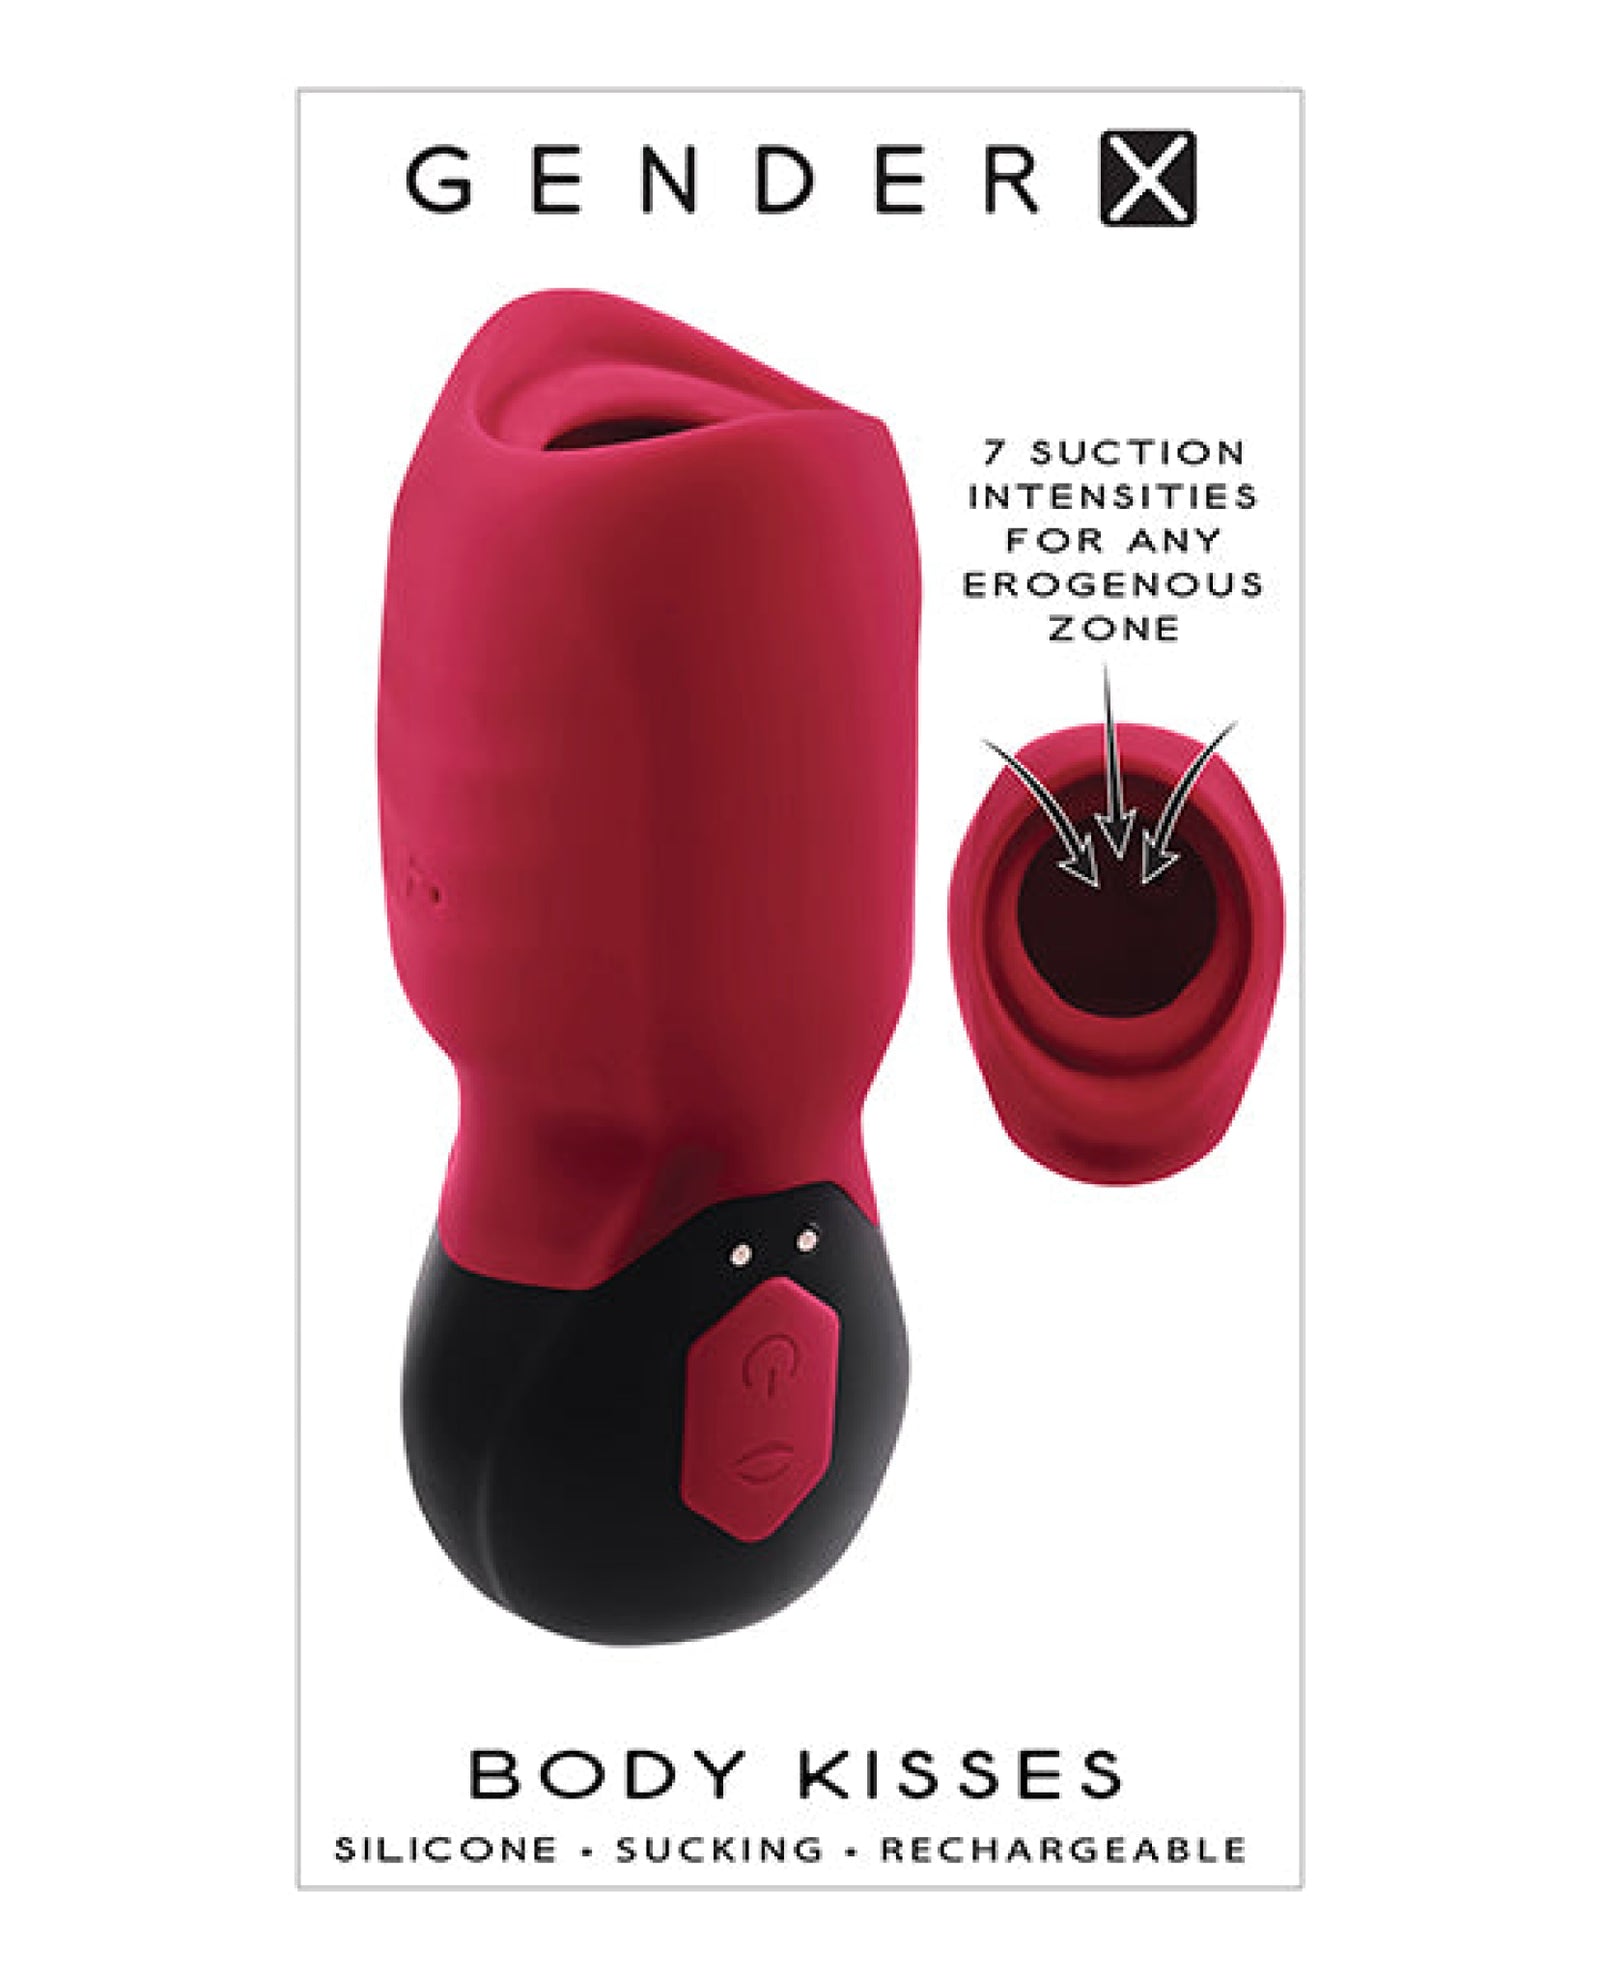 Gender X Body Kisses Vibrating Suction Massager - Red-black Gender X